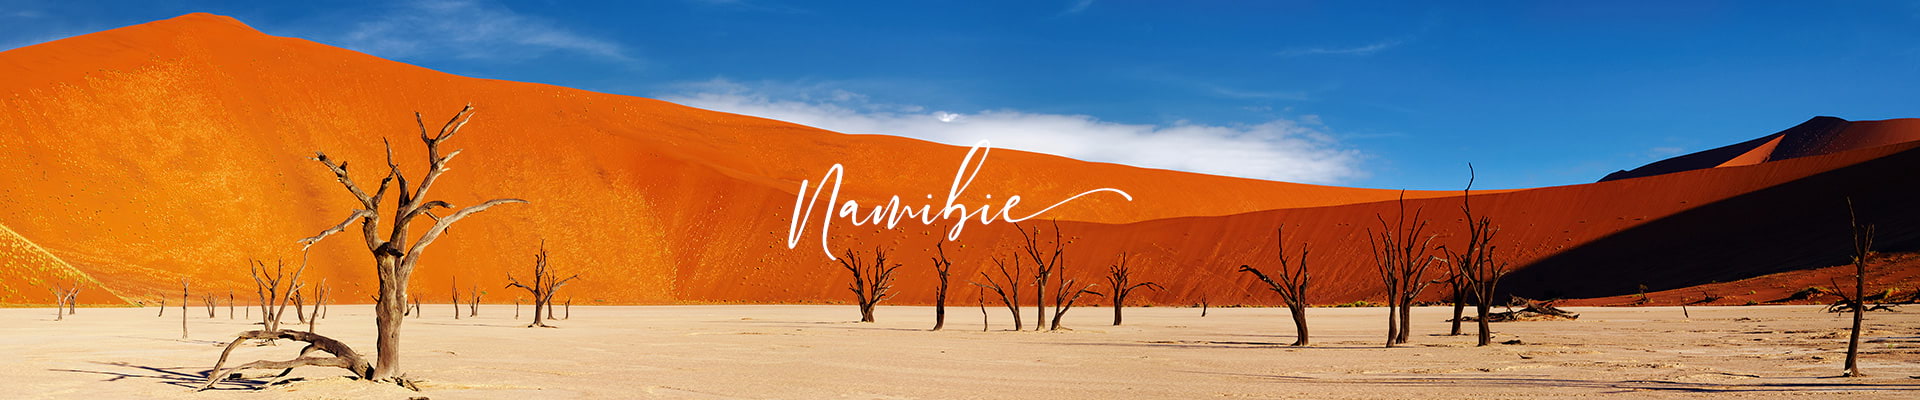 images/panos/desktop/namibie